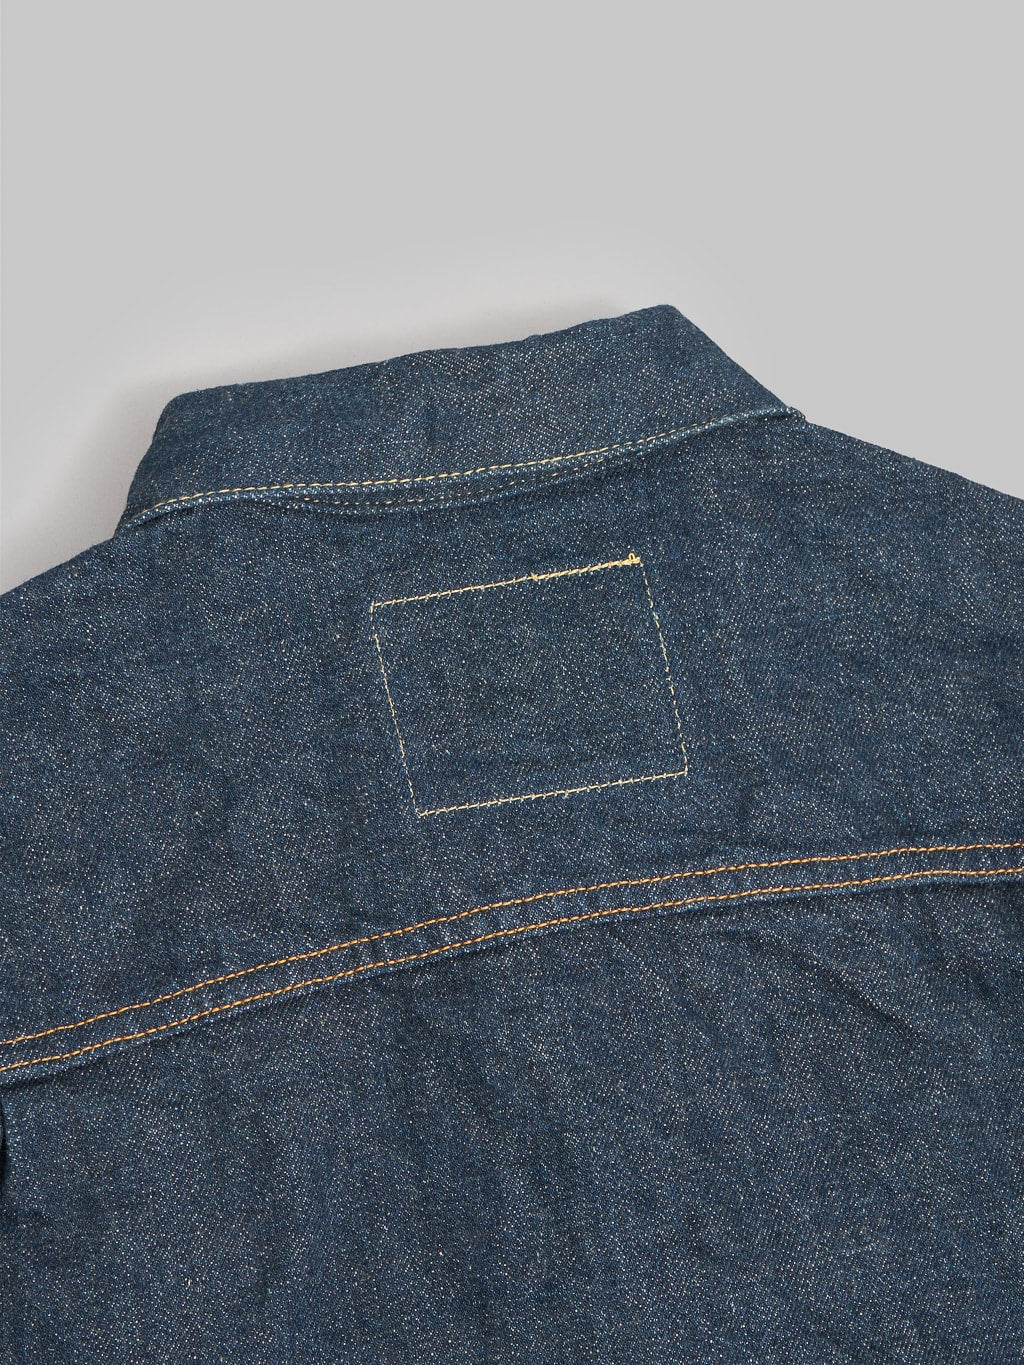 ONI Denim 02517 Ishikawadai 15 OZ Type II jacket back collar stitching